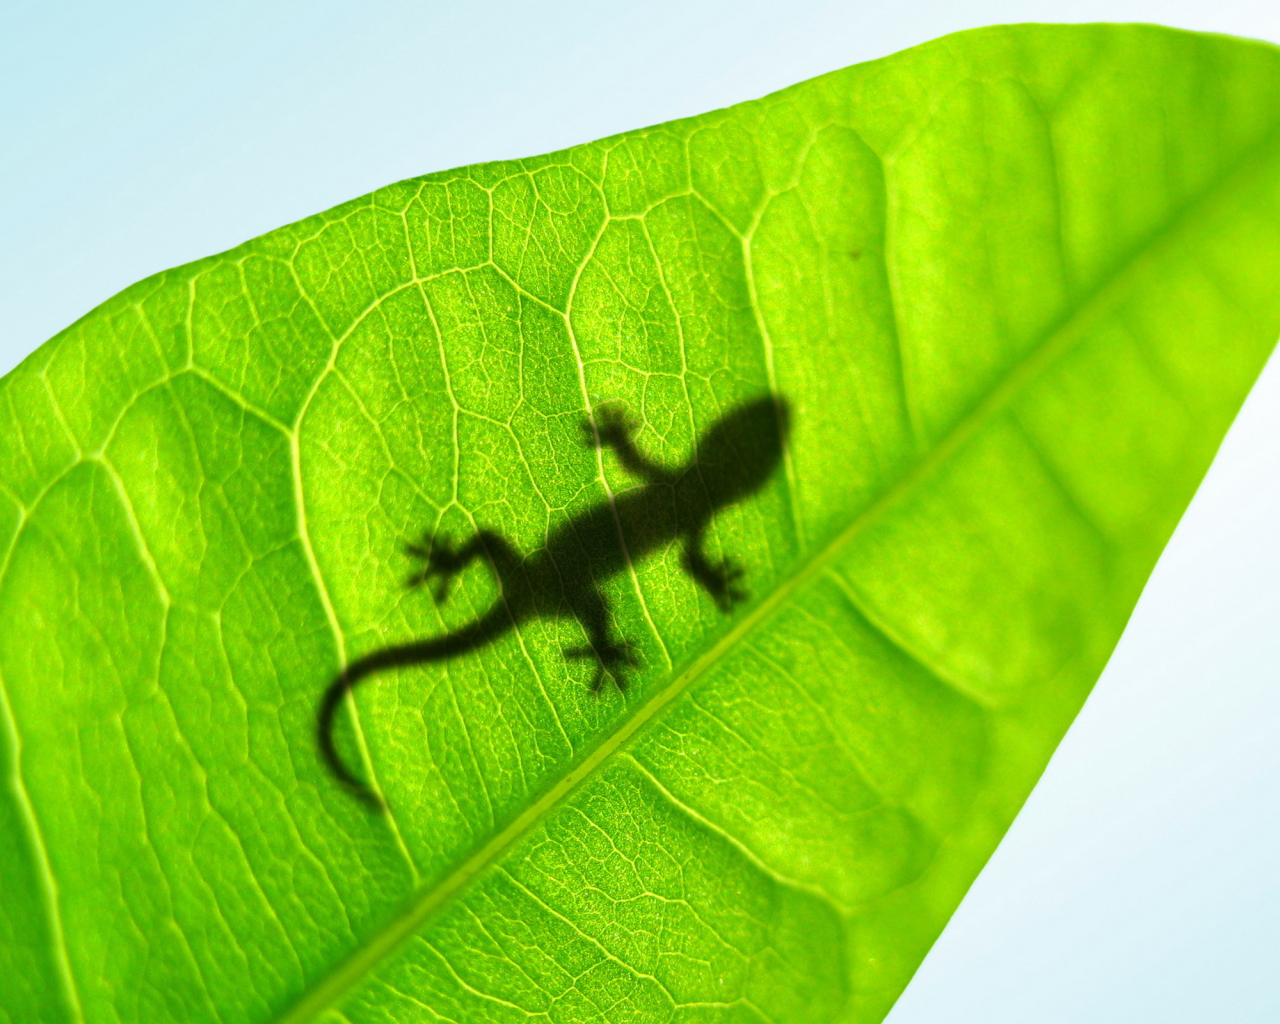 Small lizard on a leaf